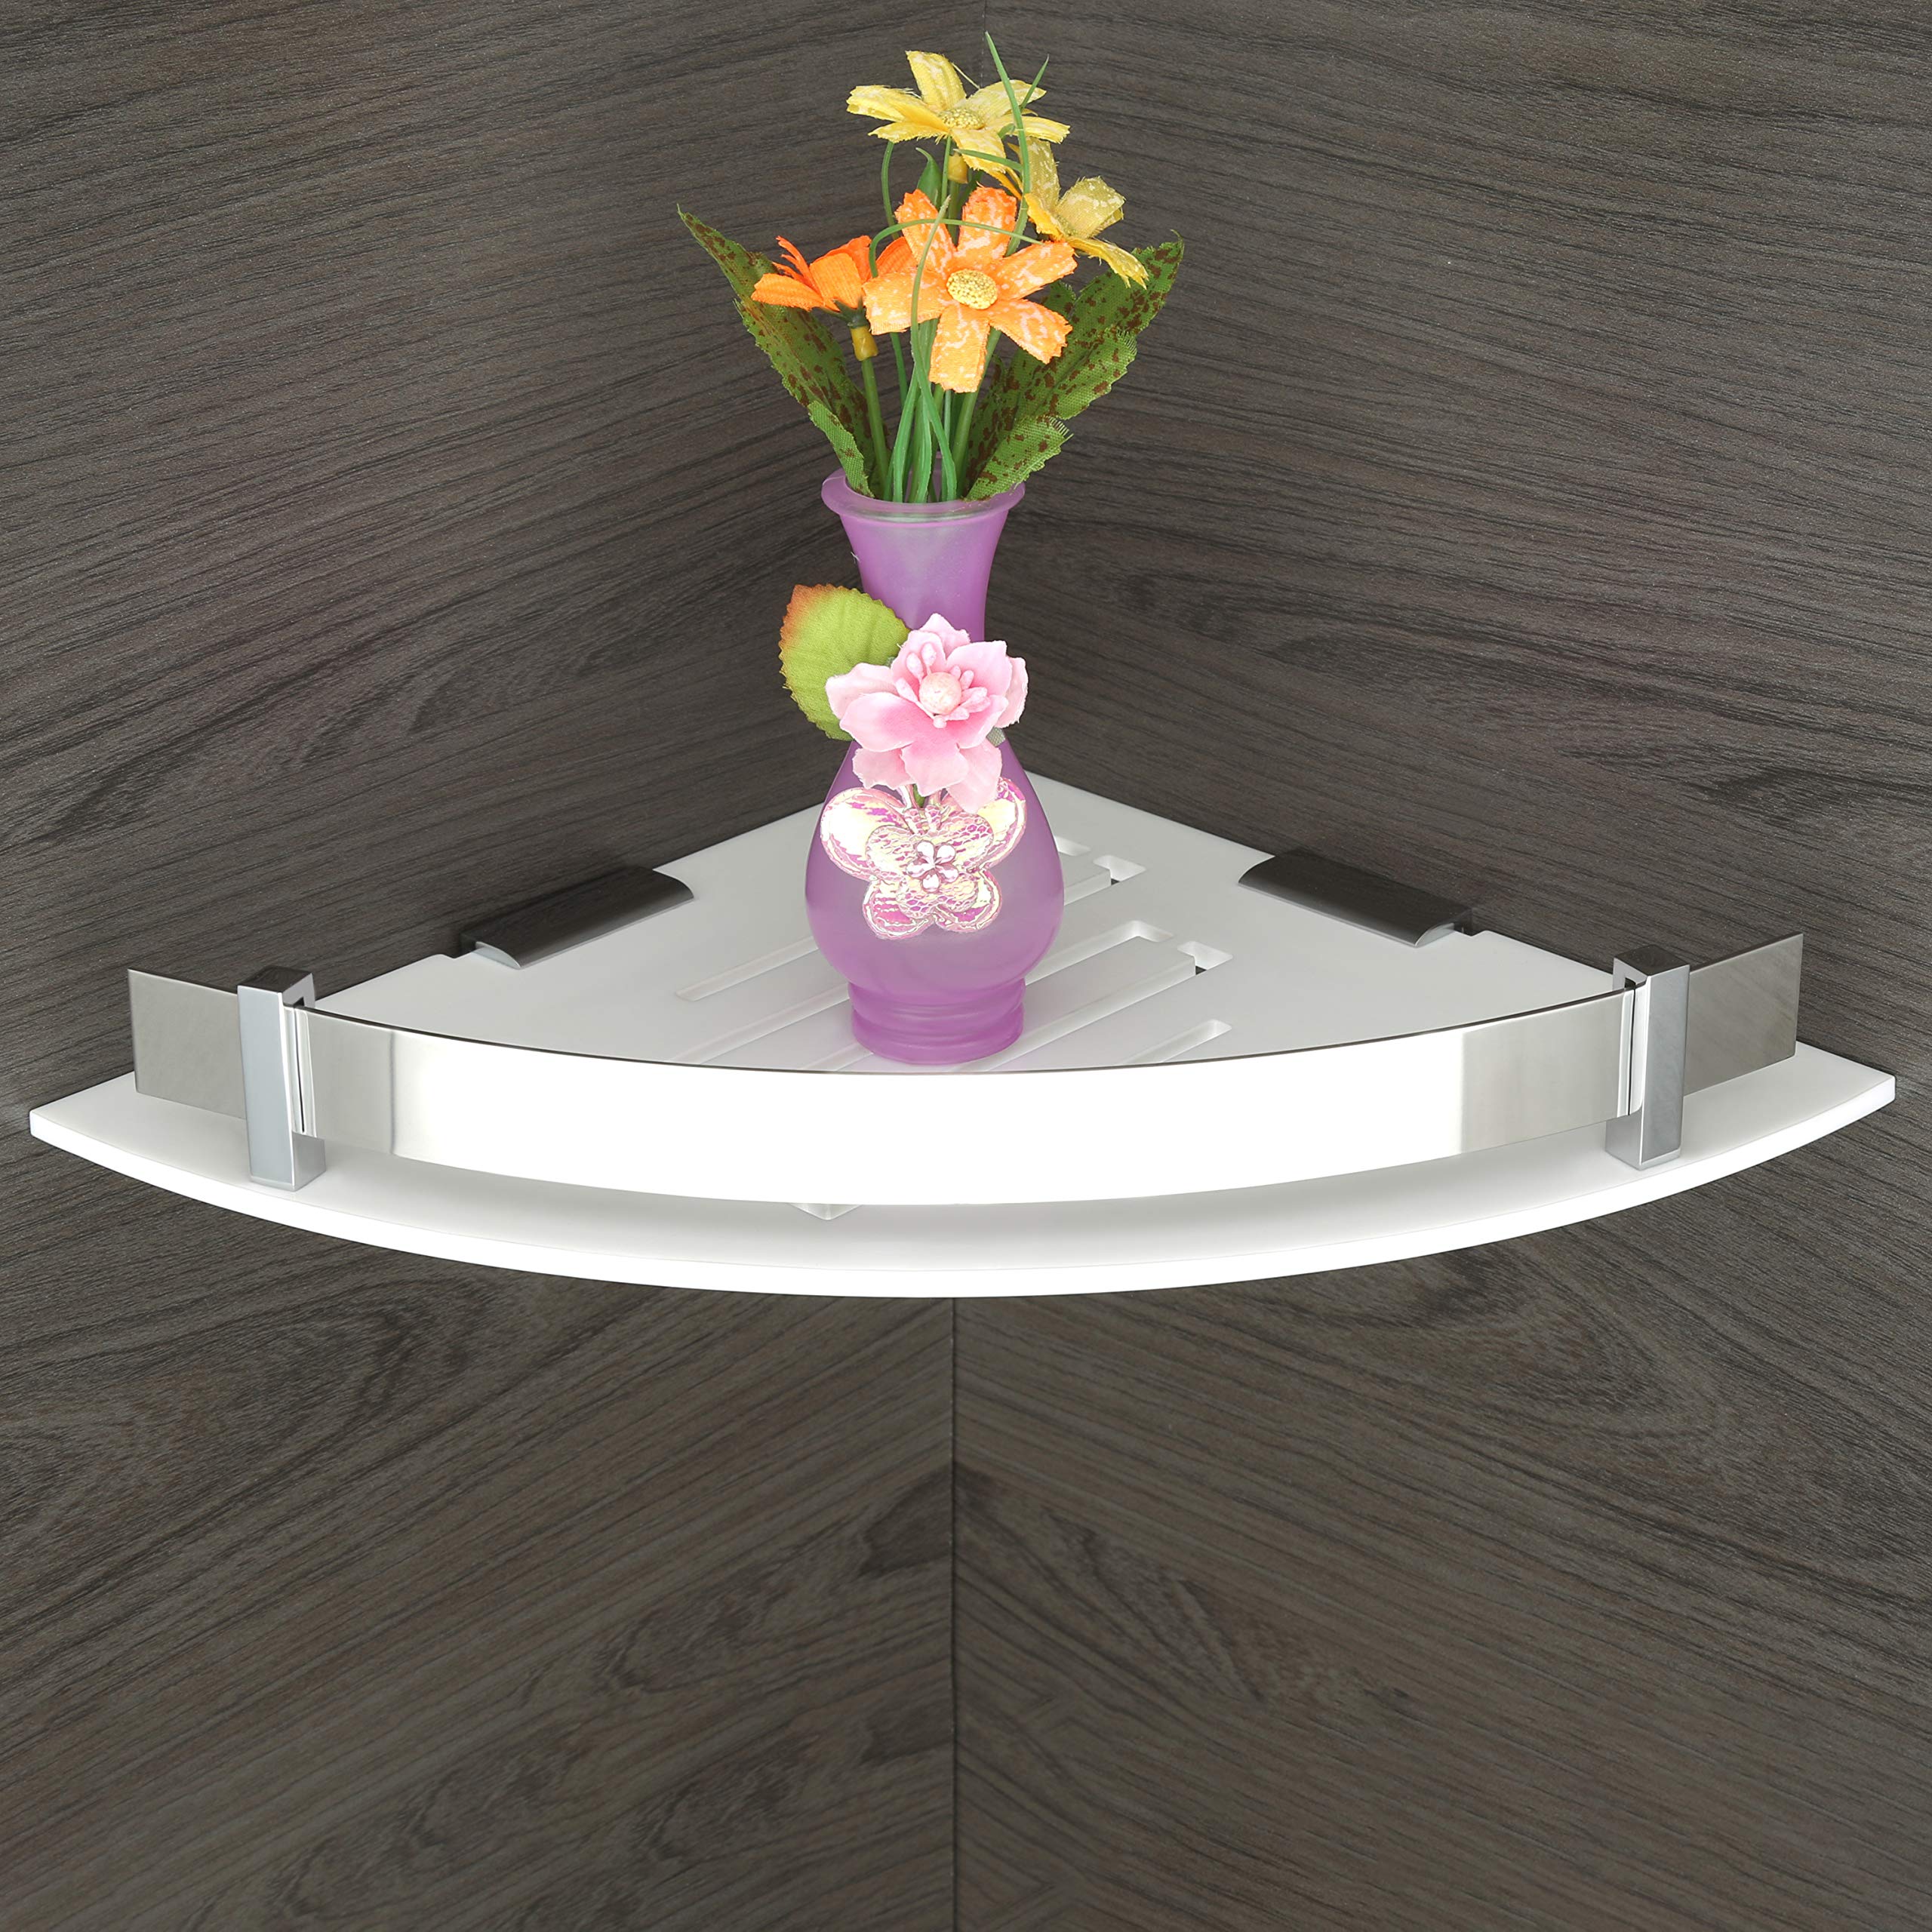 Plantex Acrylic Multipurpose Bathroom Corner Shelf/Rack/Decorative Corner Wall Shelf/Bathroom Accessories( Silver, White, 12 x 12 in)